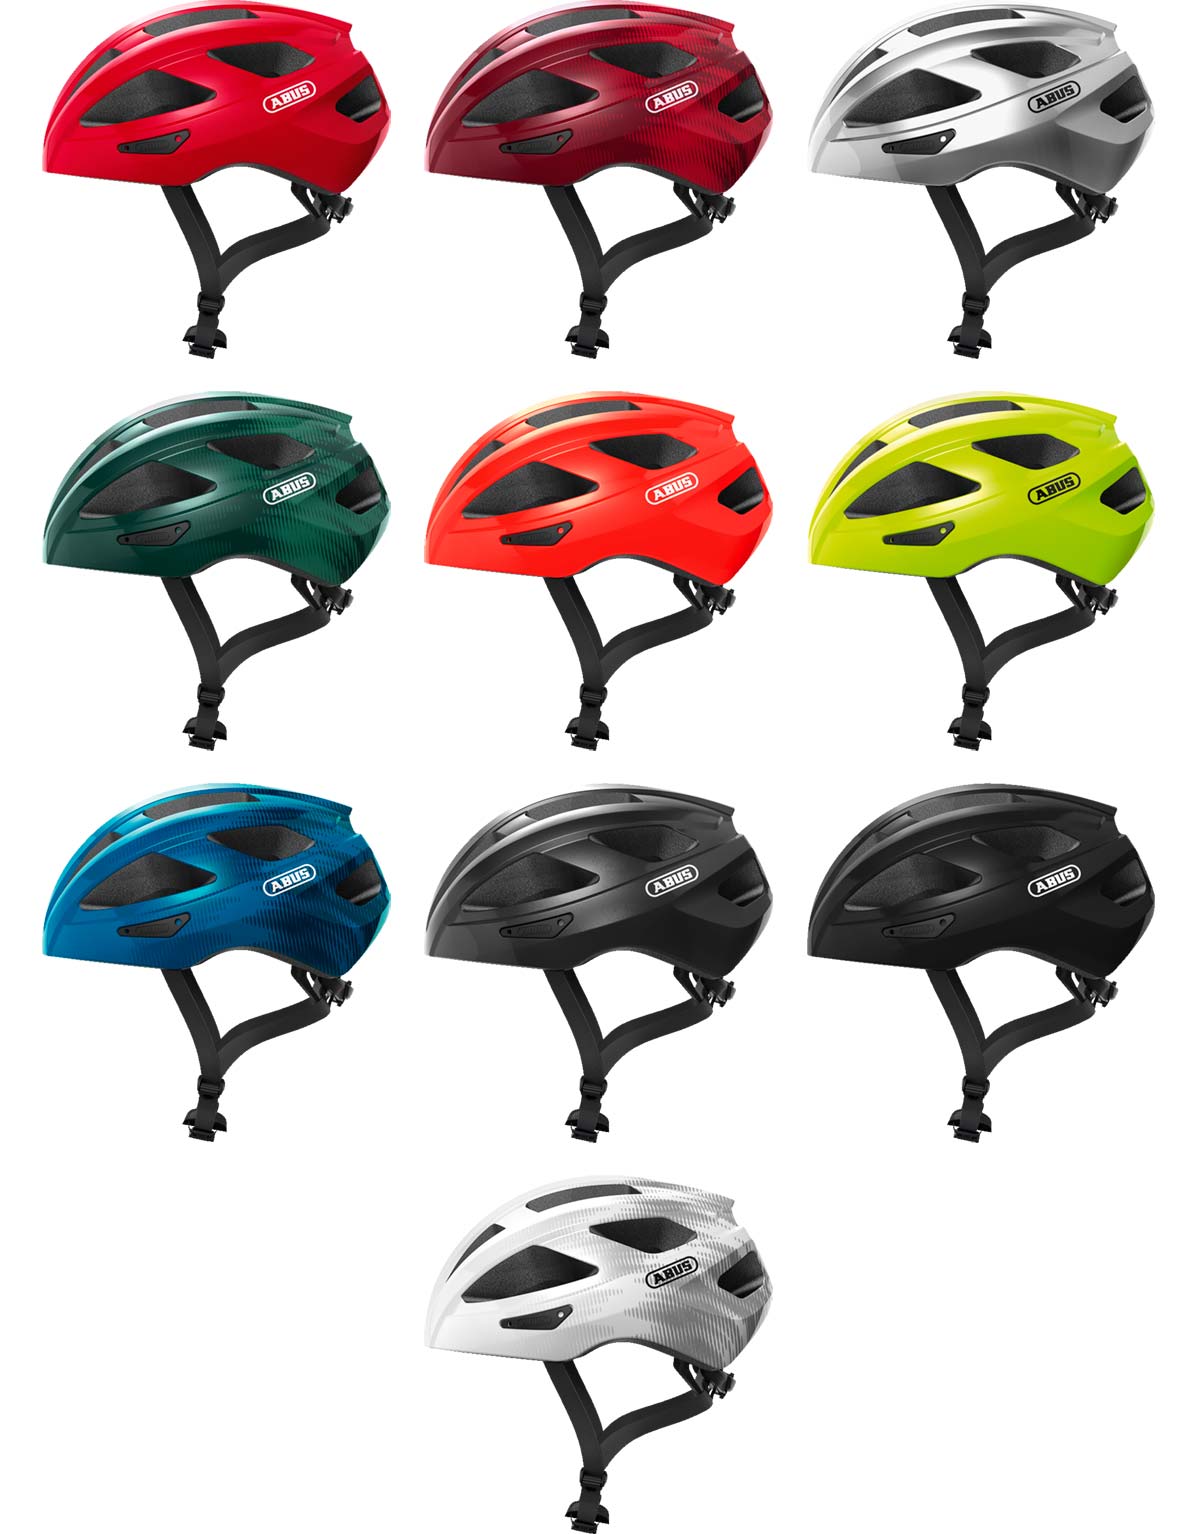 En TodoMountainBike: Abus Macator, un casco económico diseñado para ciclistas principiantes de todas las modalidades